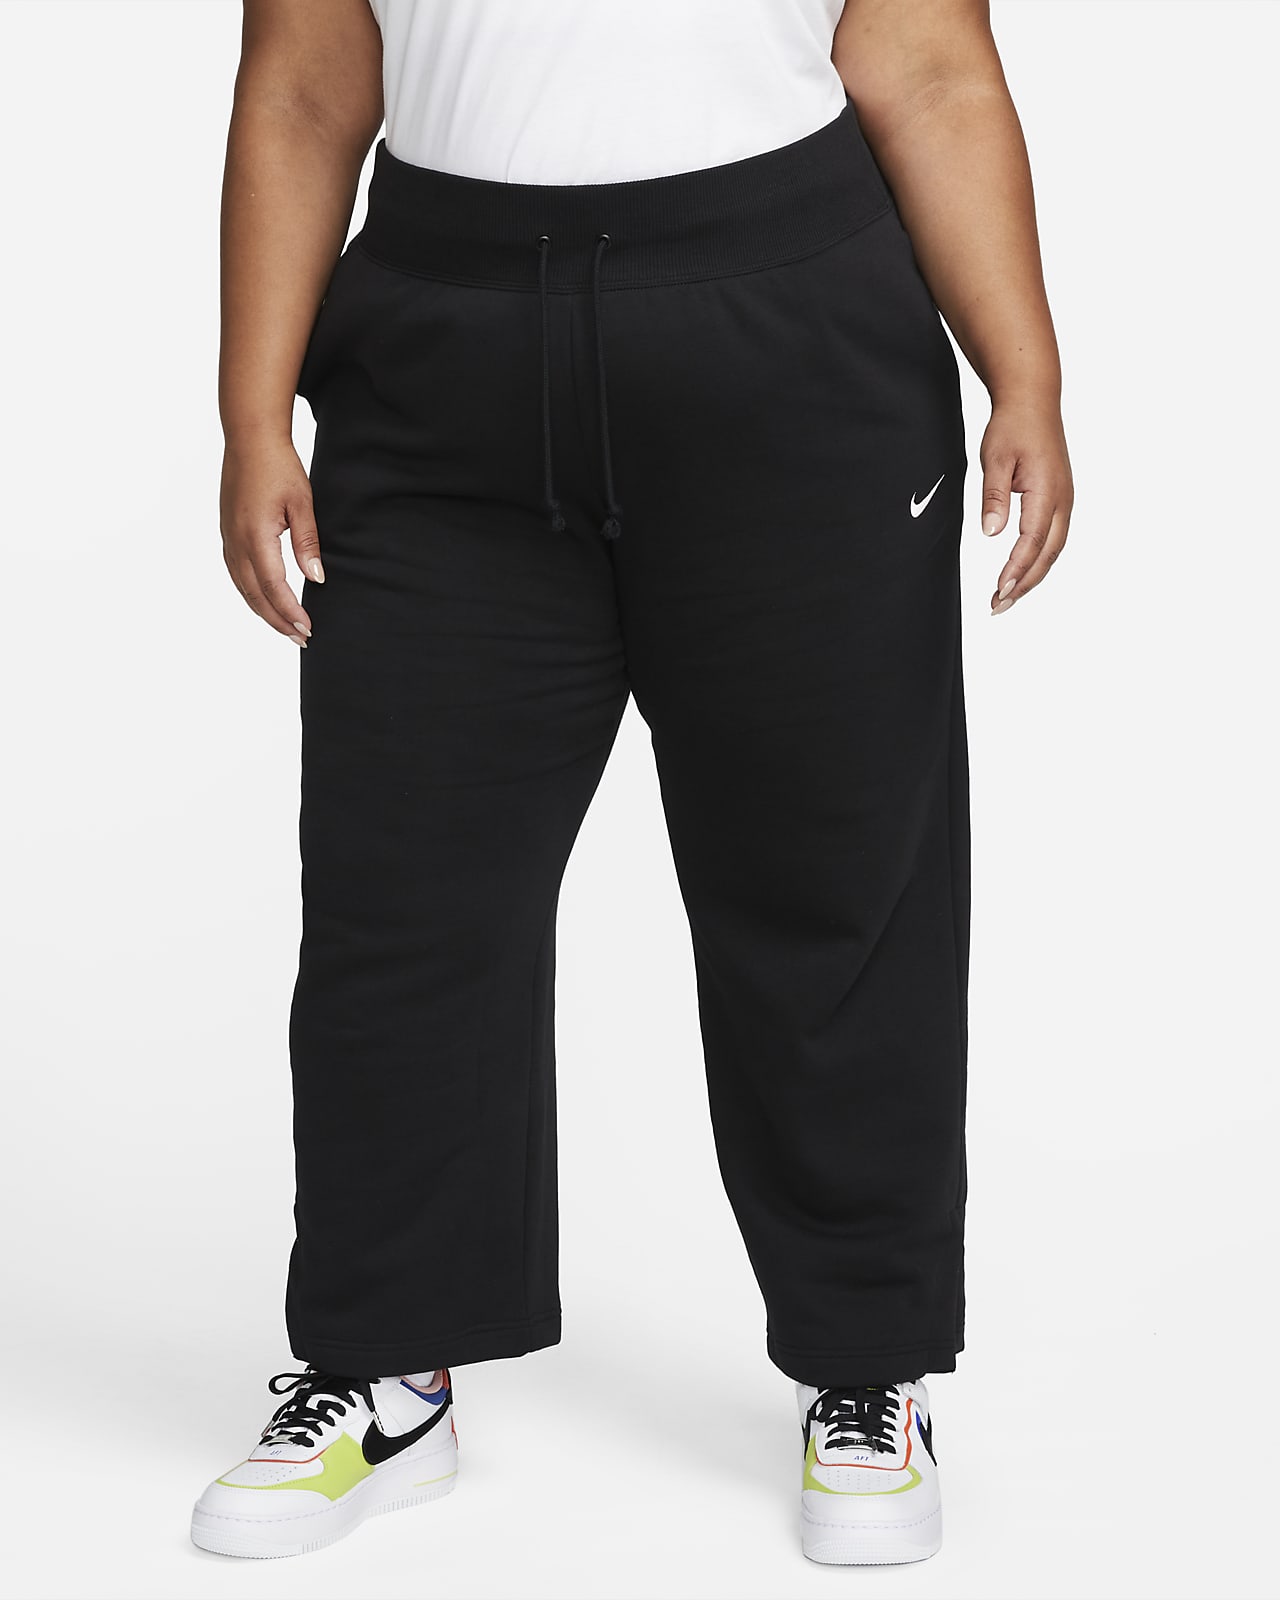 Pantaloni tuta a gamba ampia e vita alta Nike Sportswear Phoenix Fleece (Plus size) – Donna